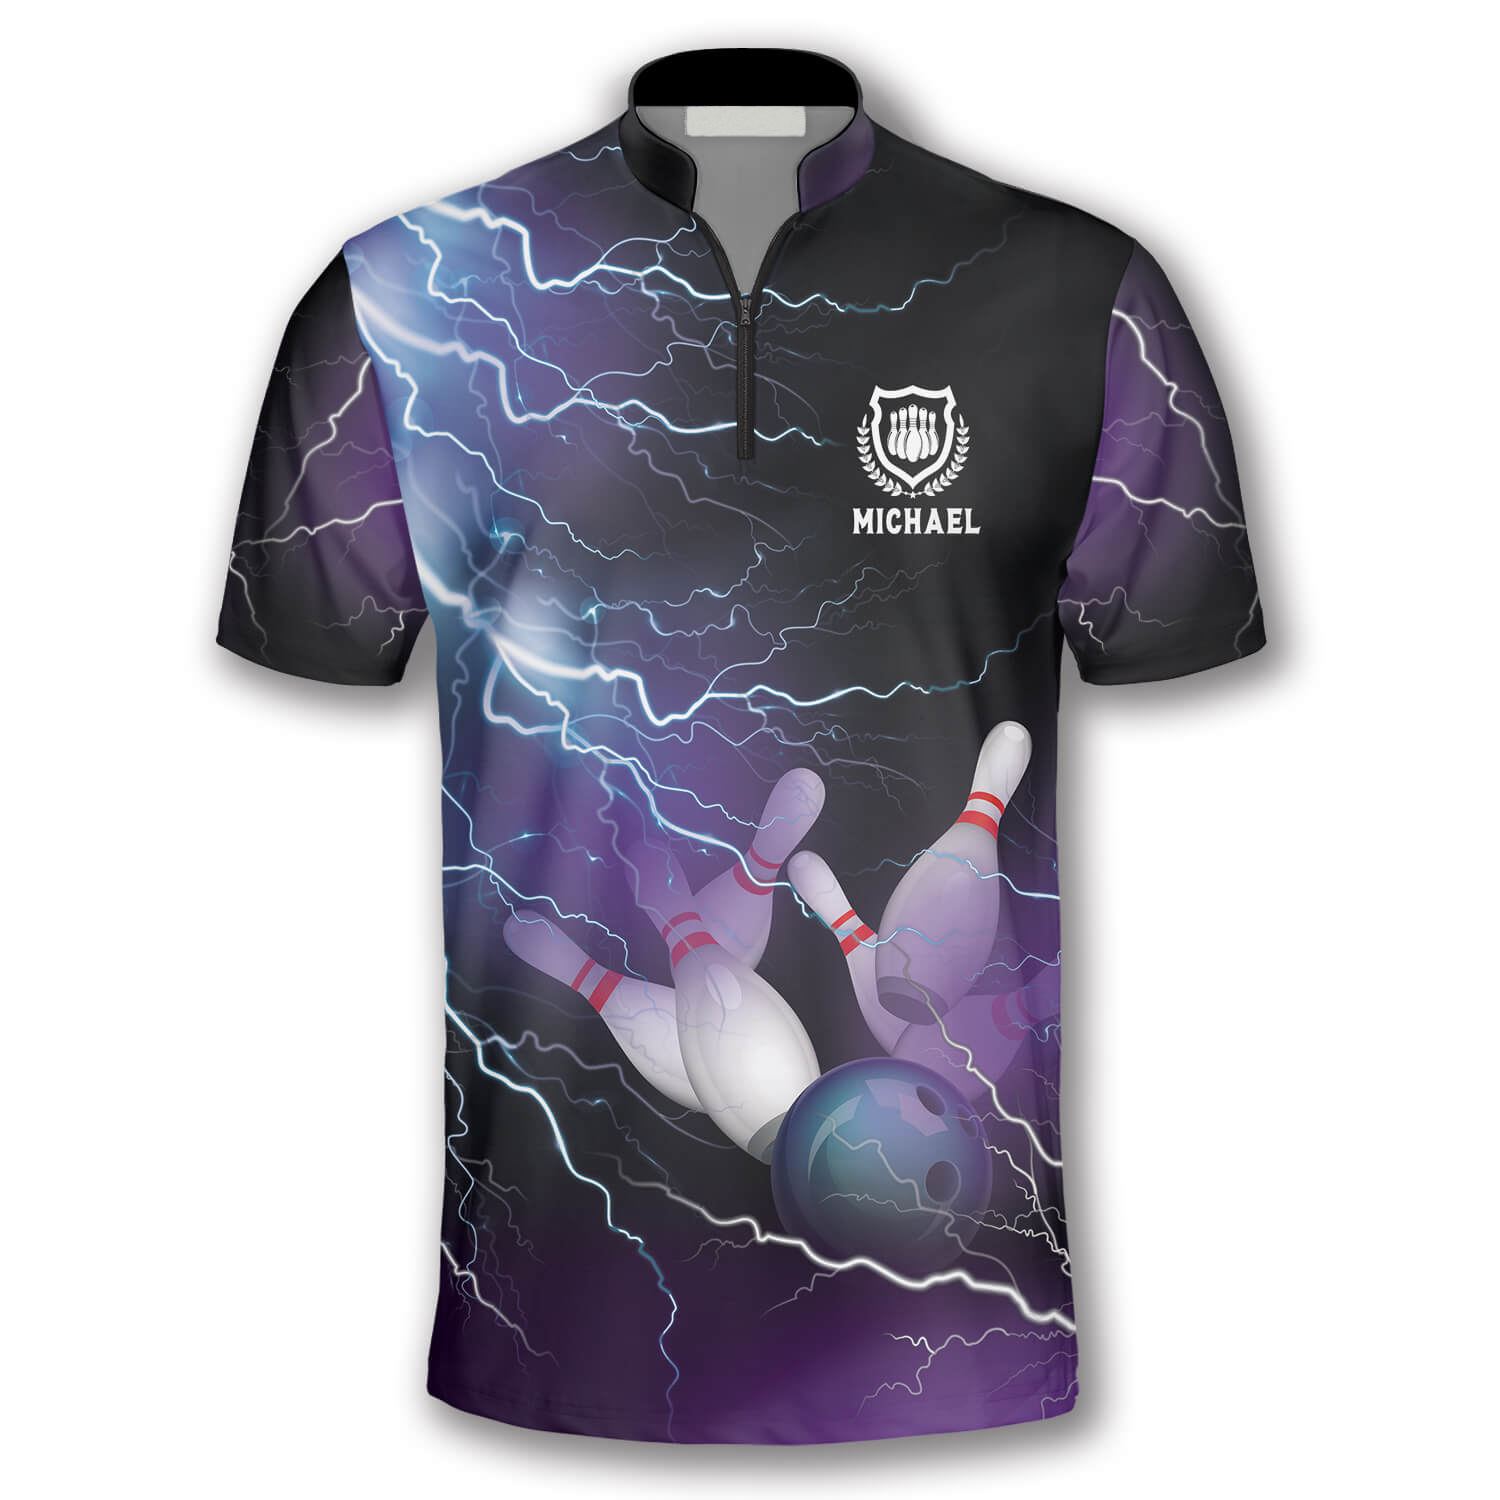 Bowling Strike Thunder Lightning Custom Bowling Jerseys for Men/ Uniform Shirt for Bowling Team